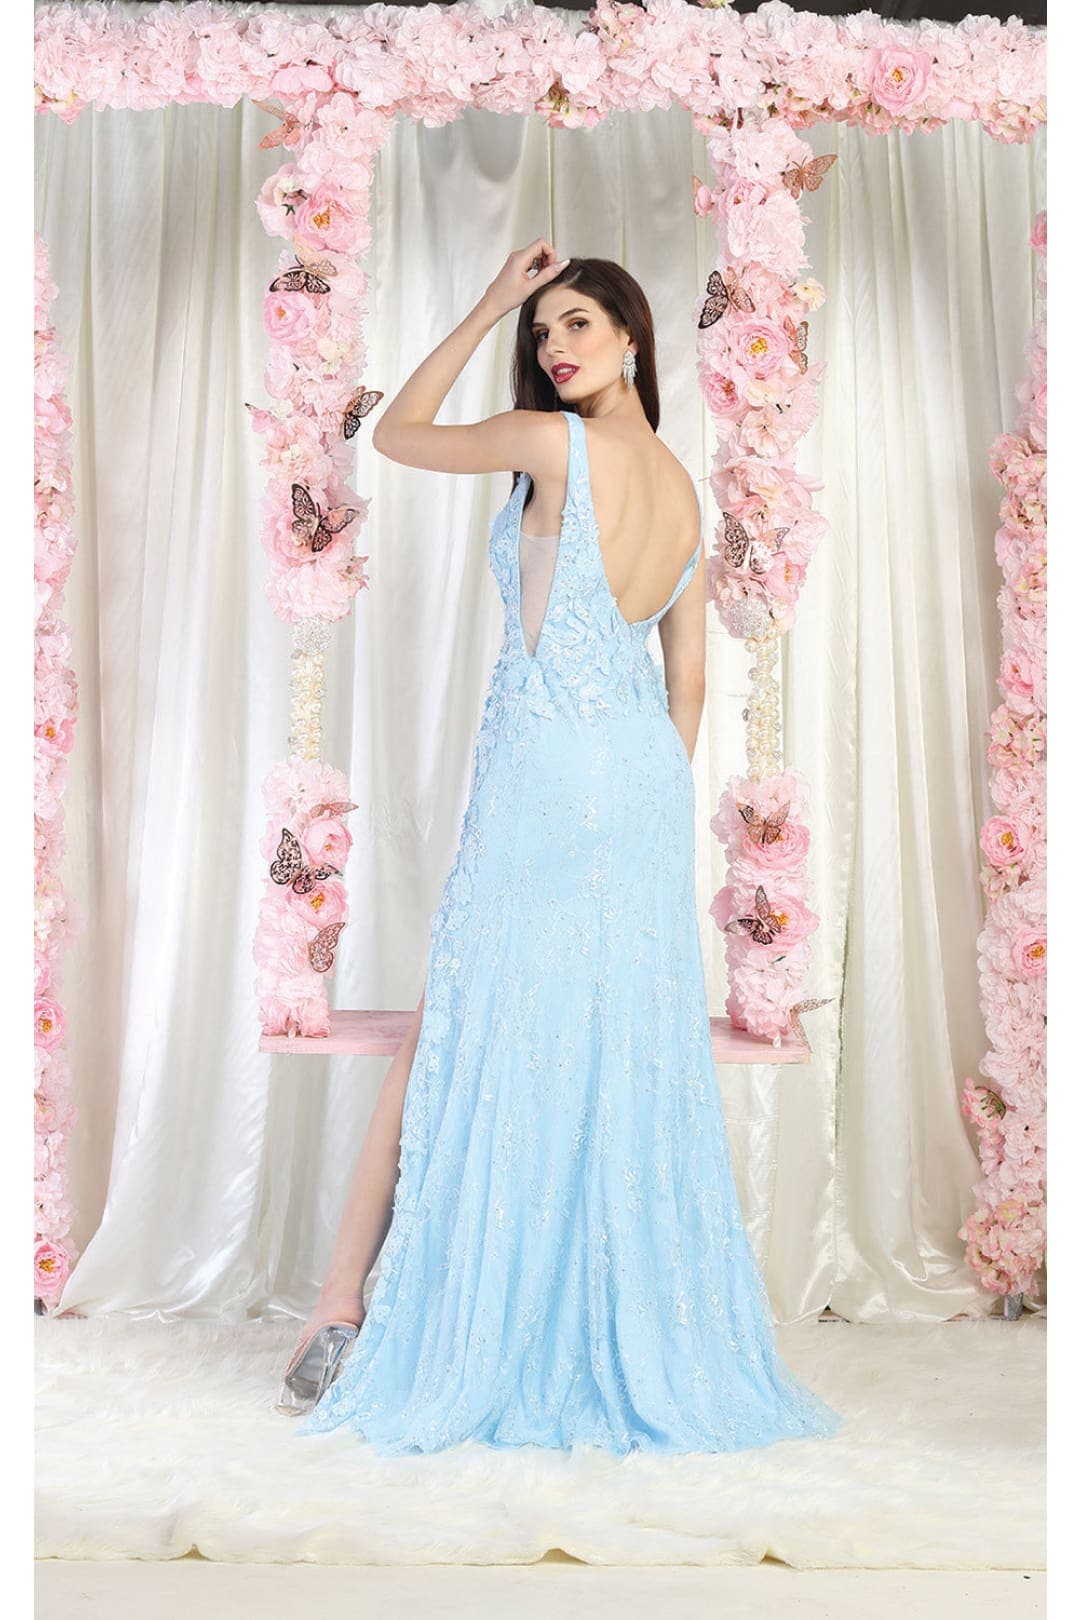 Royal Queen RQ7976 3D Lace Applique Prom Dress - Dress